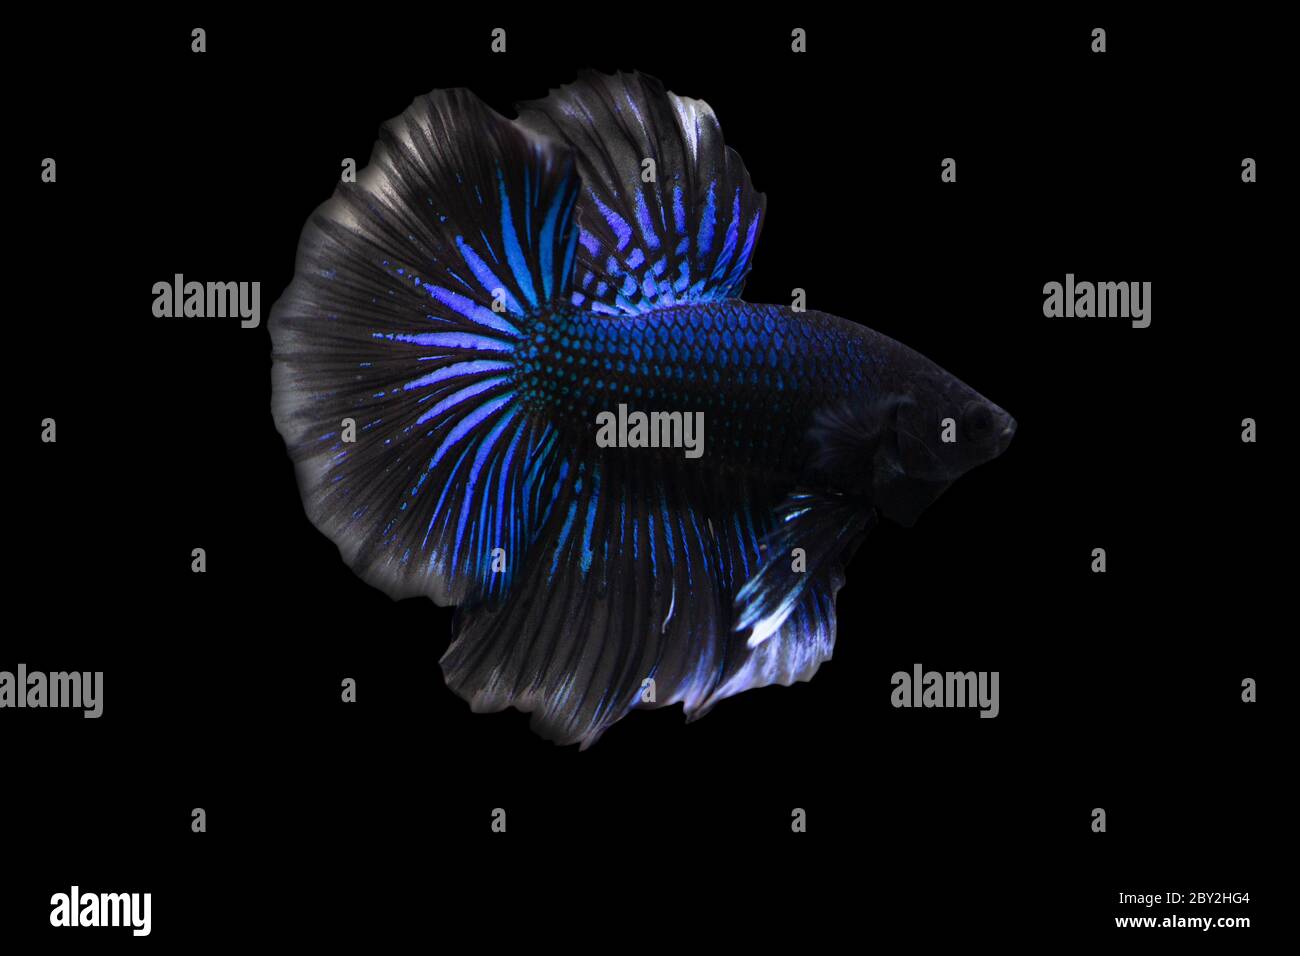 Betta Blue Black Halfmoon  HM Male or Plakat Fighting Fish Splendens  on Black Background. Stock Photo